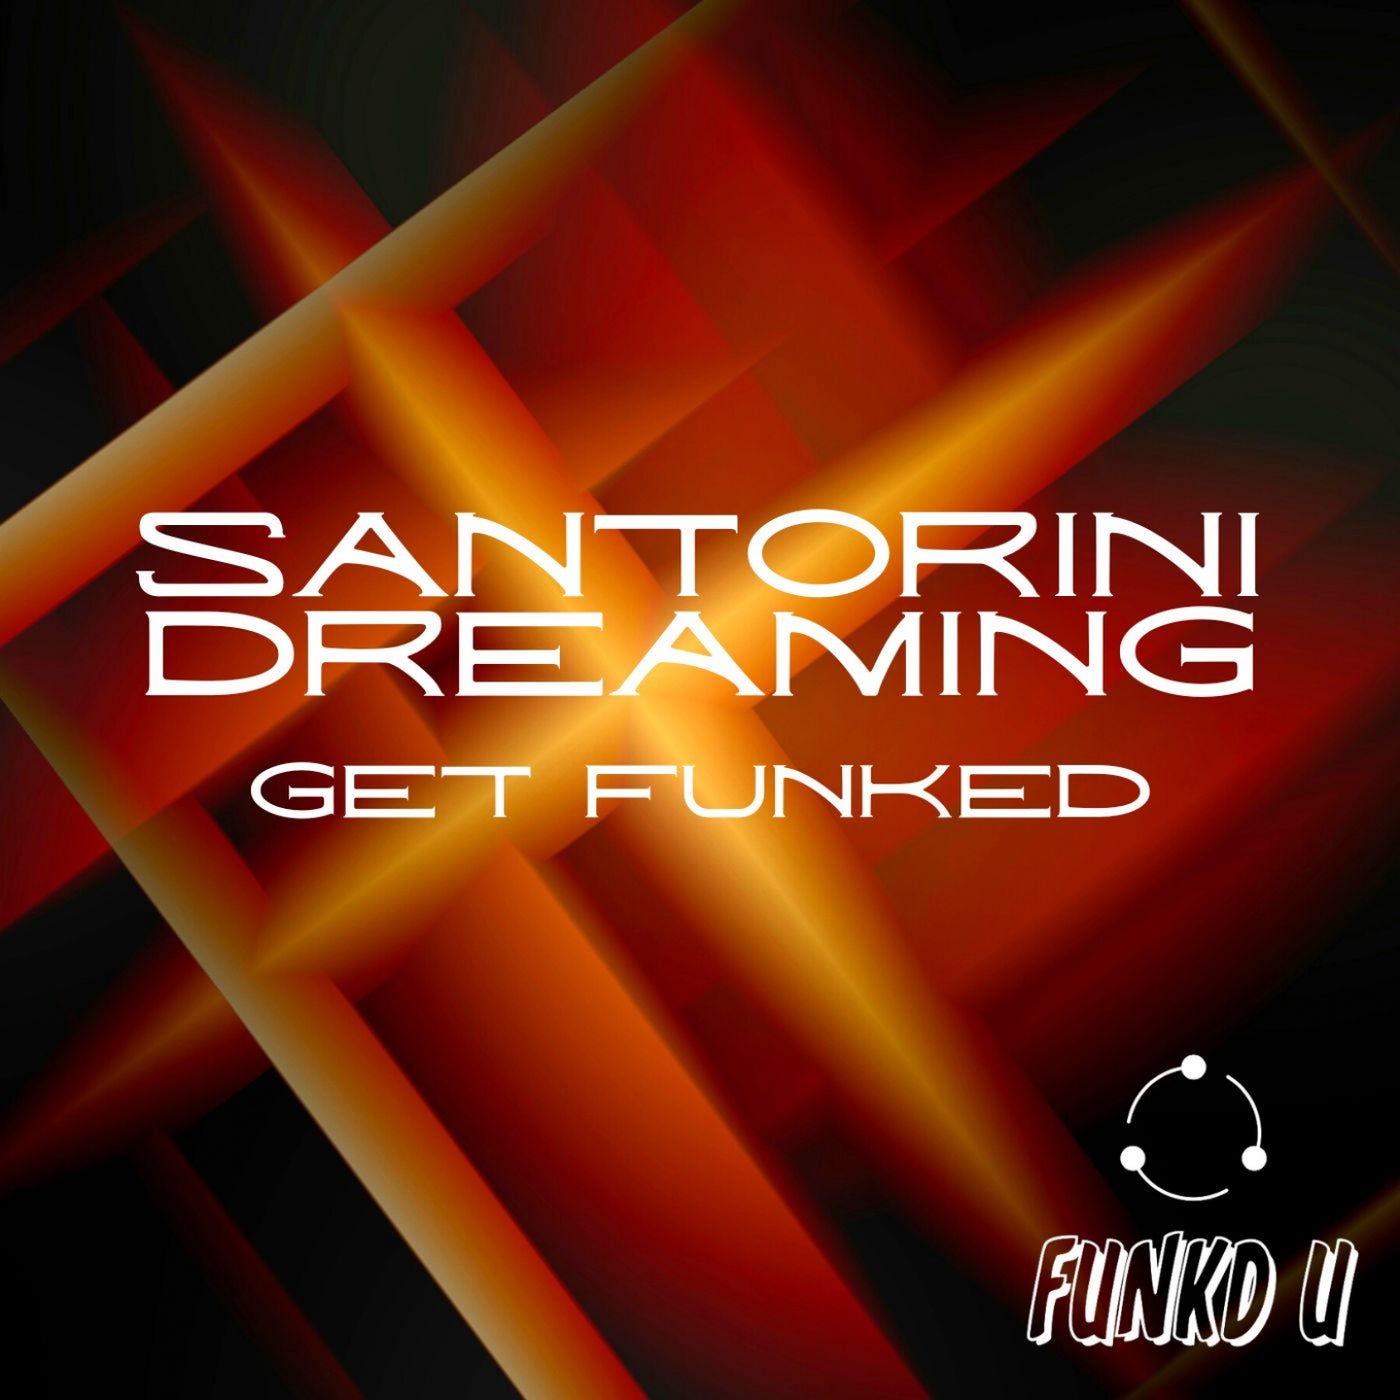 Get Funked - Santorini Dreaming [FUNKD U]